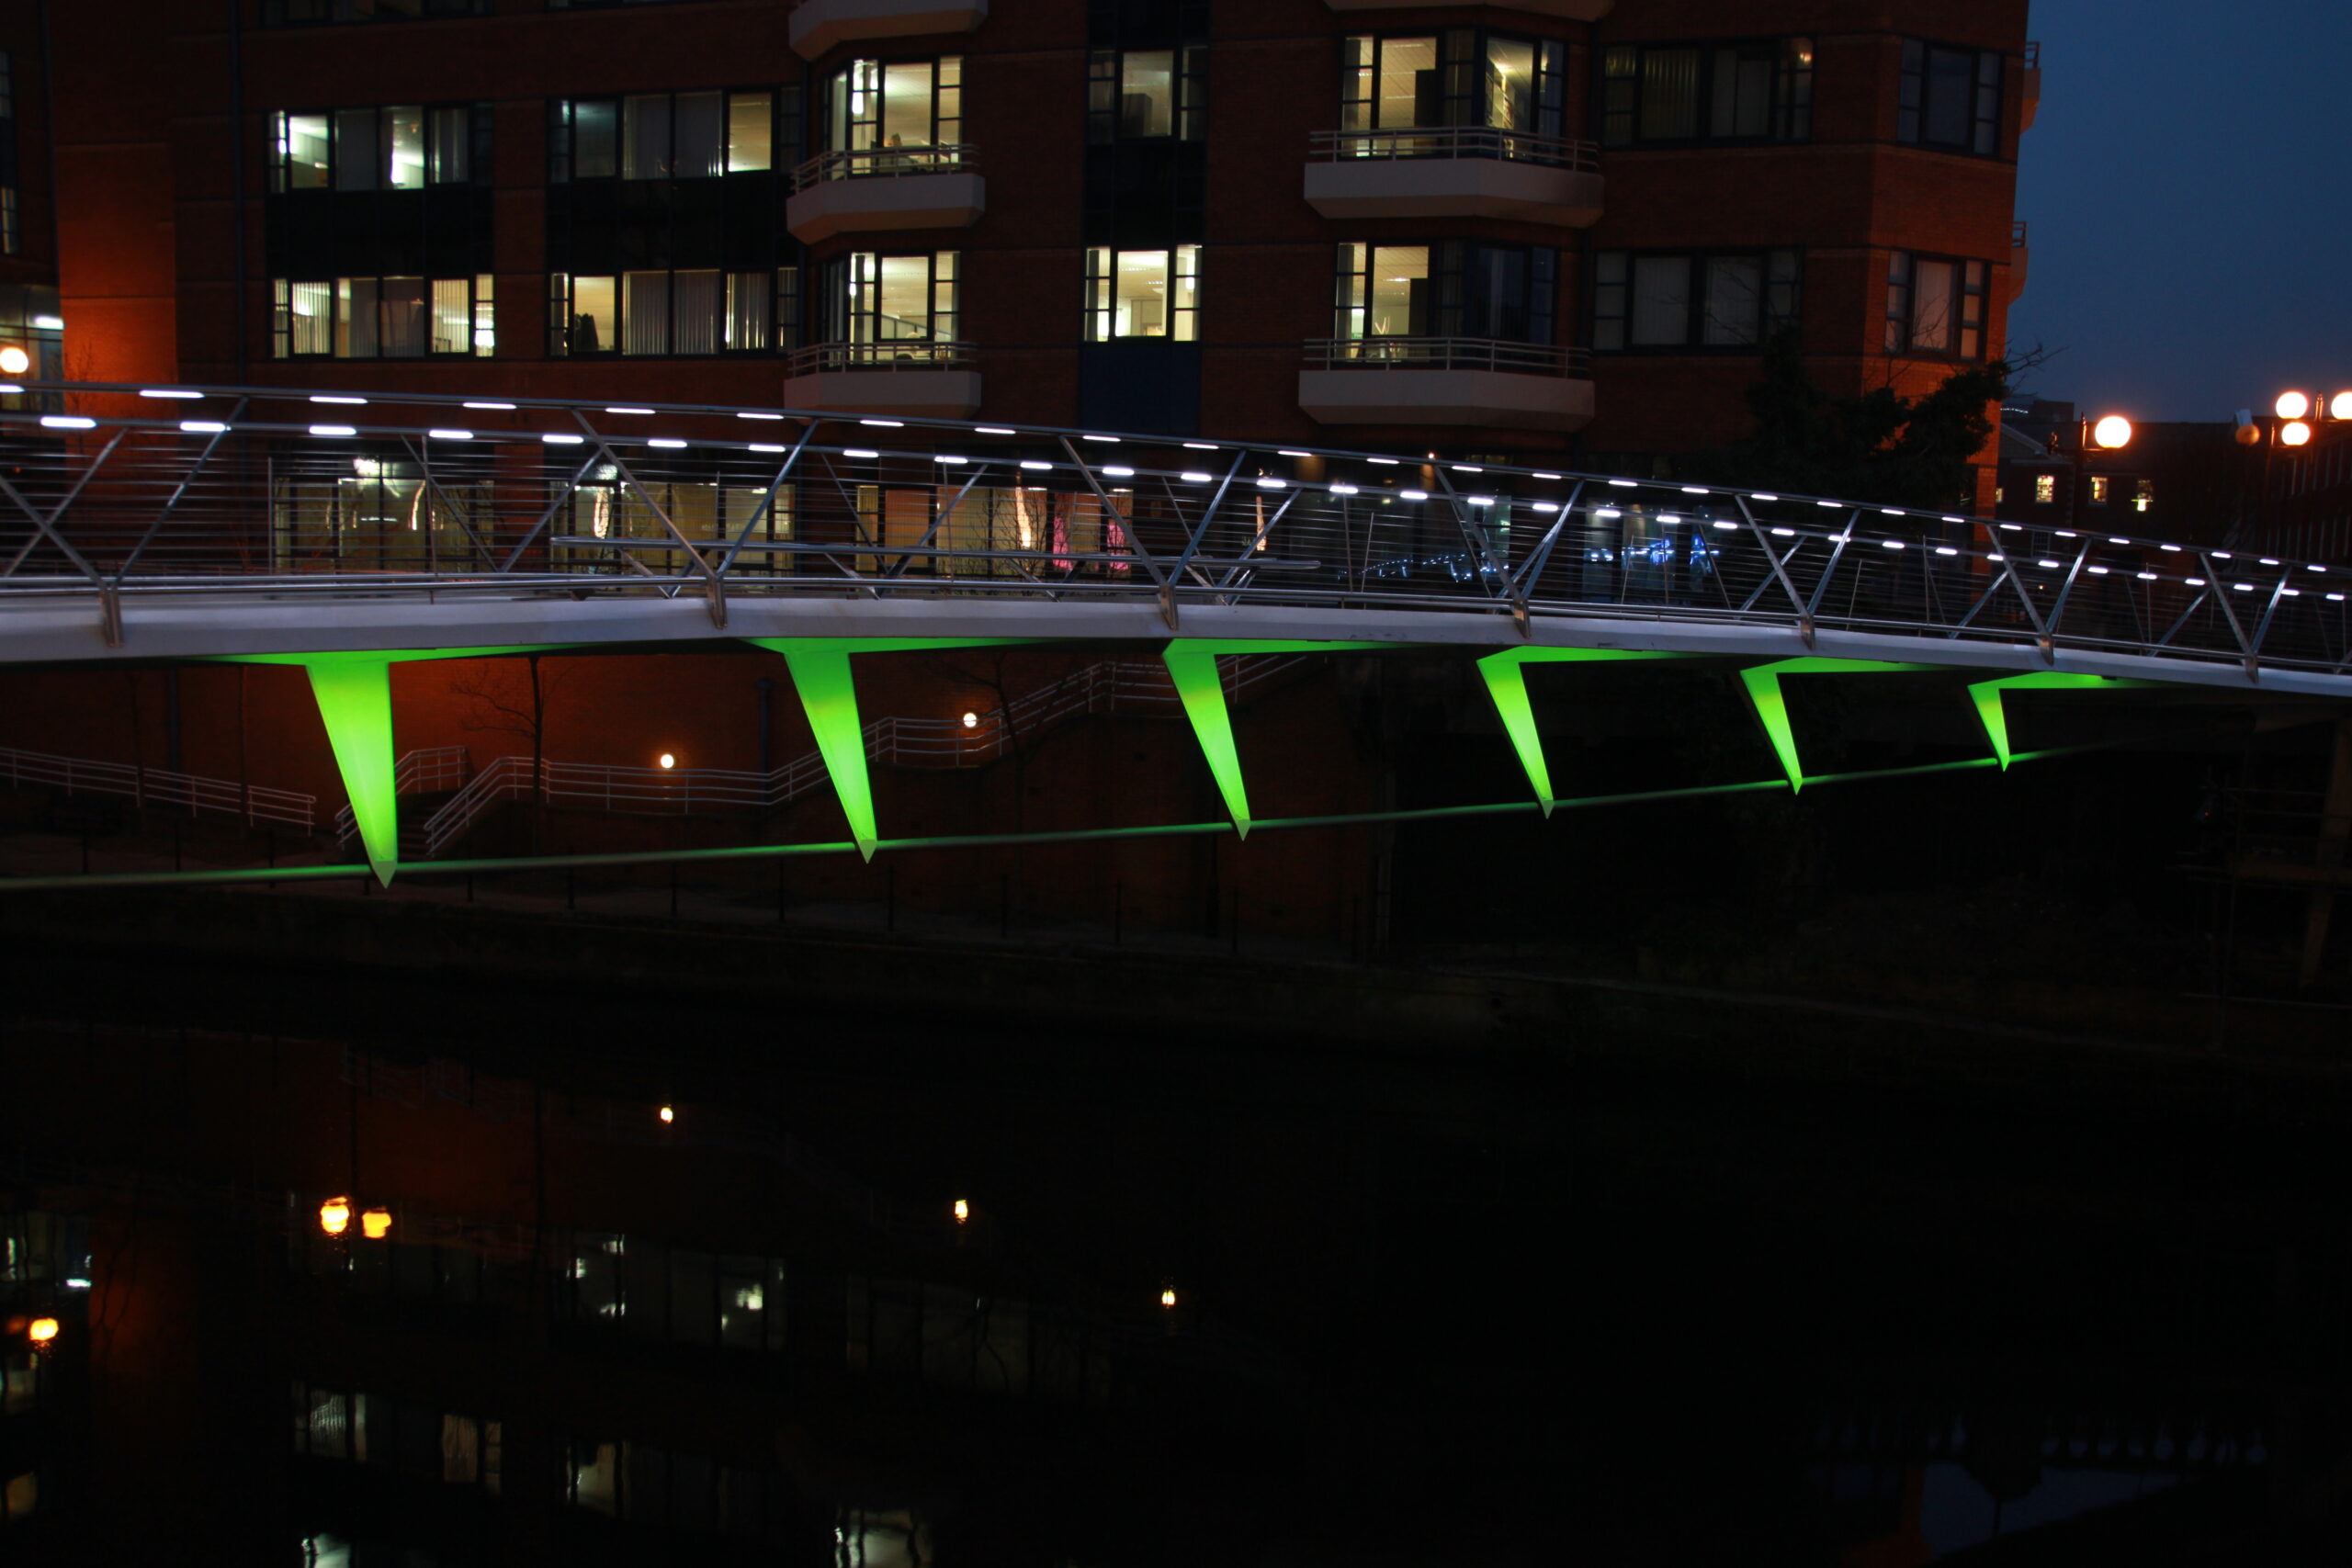 Irwell Footbridge Handrail Lighting - Architectural Lighting for Bridges & Walkways